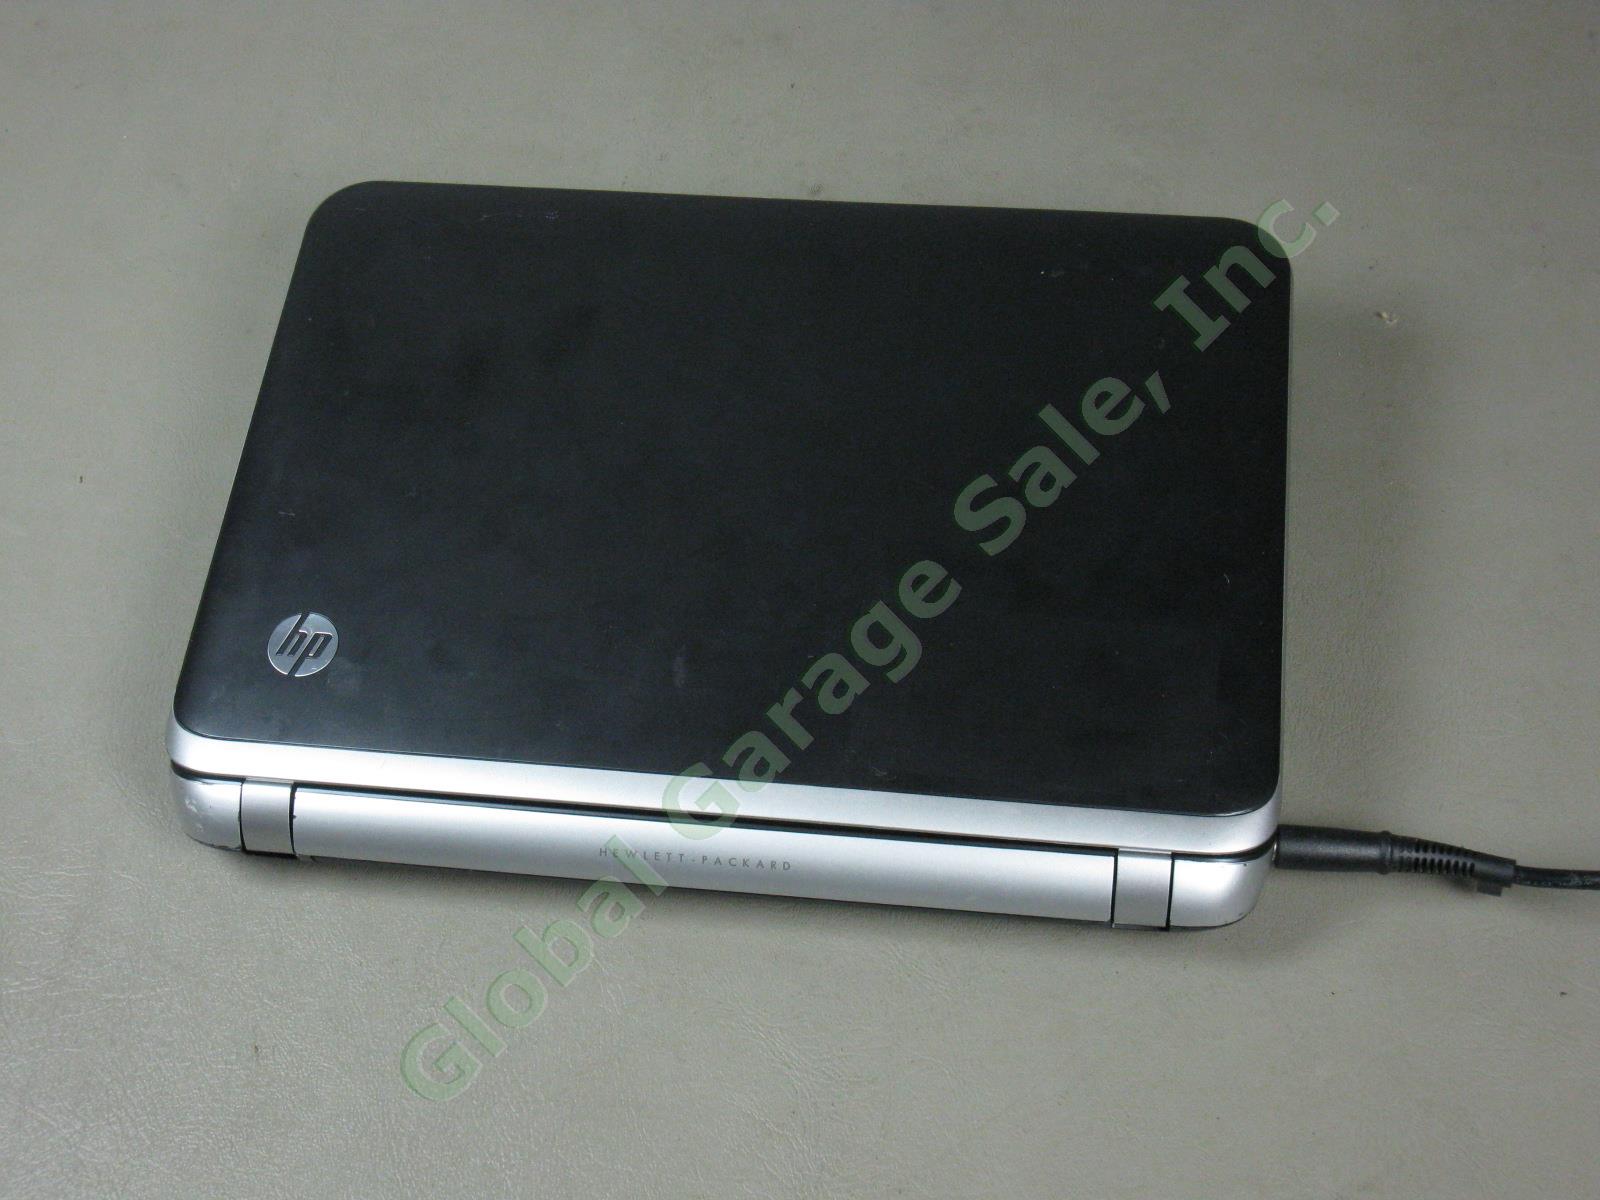 HP 3115m 11.6" Notebook Laptop Computer AMD 1.65GHz 4GB 320GB Windows 7 Ultimate 3